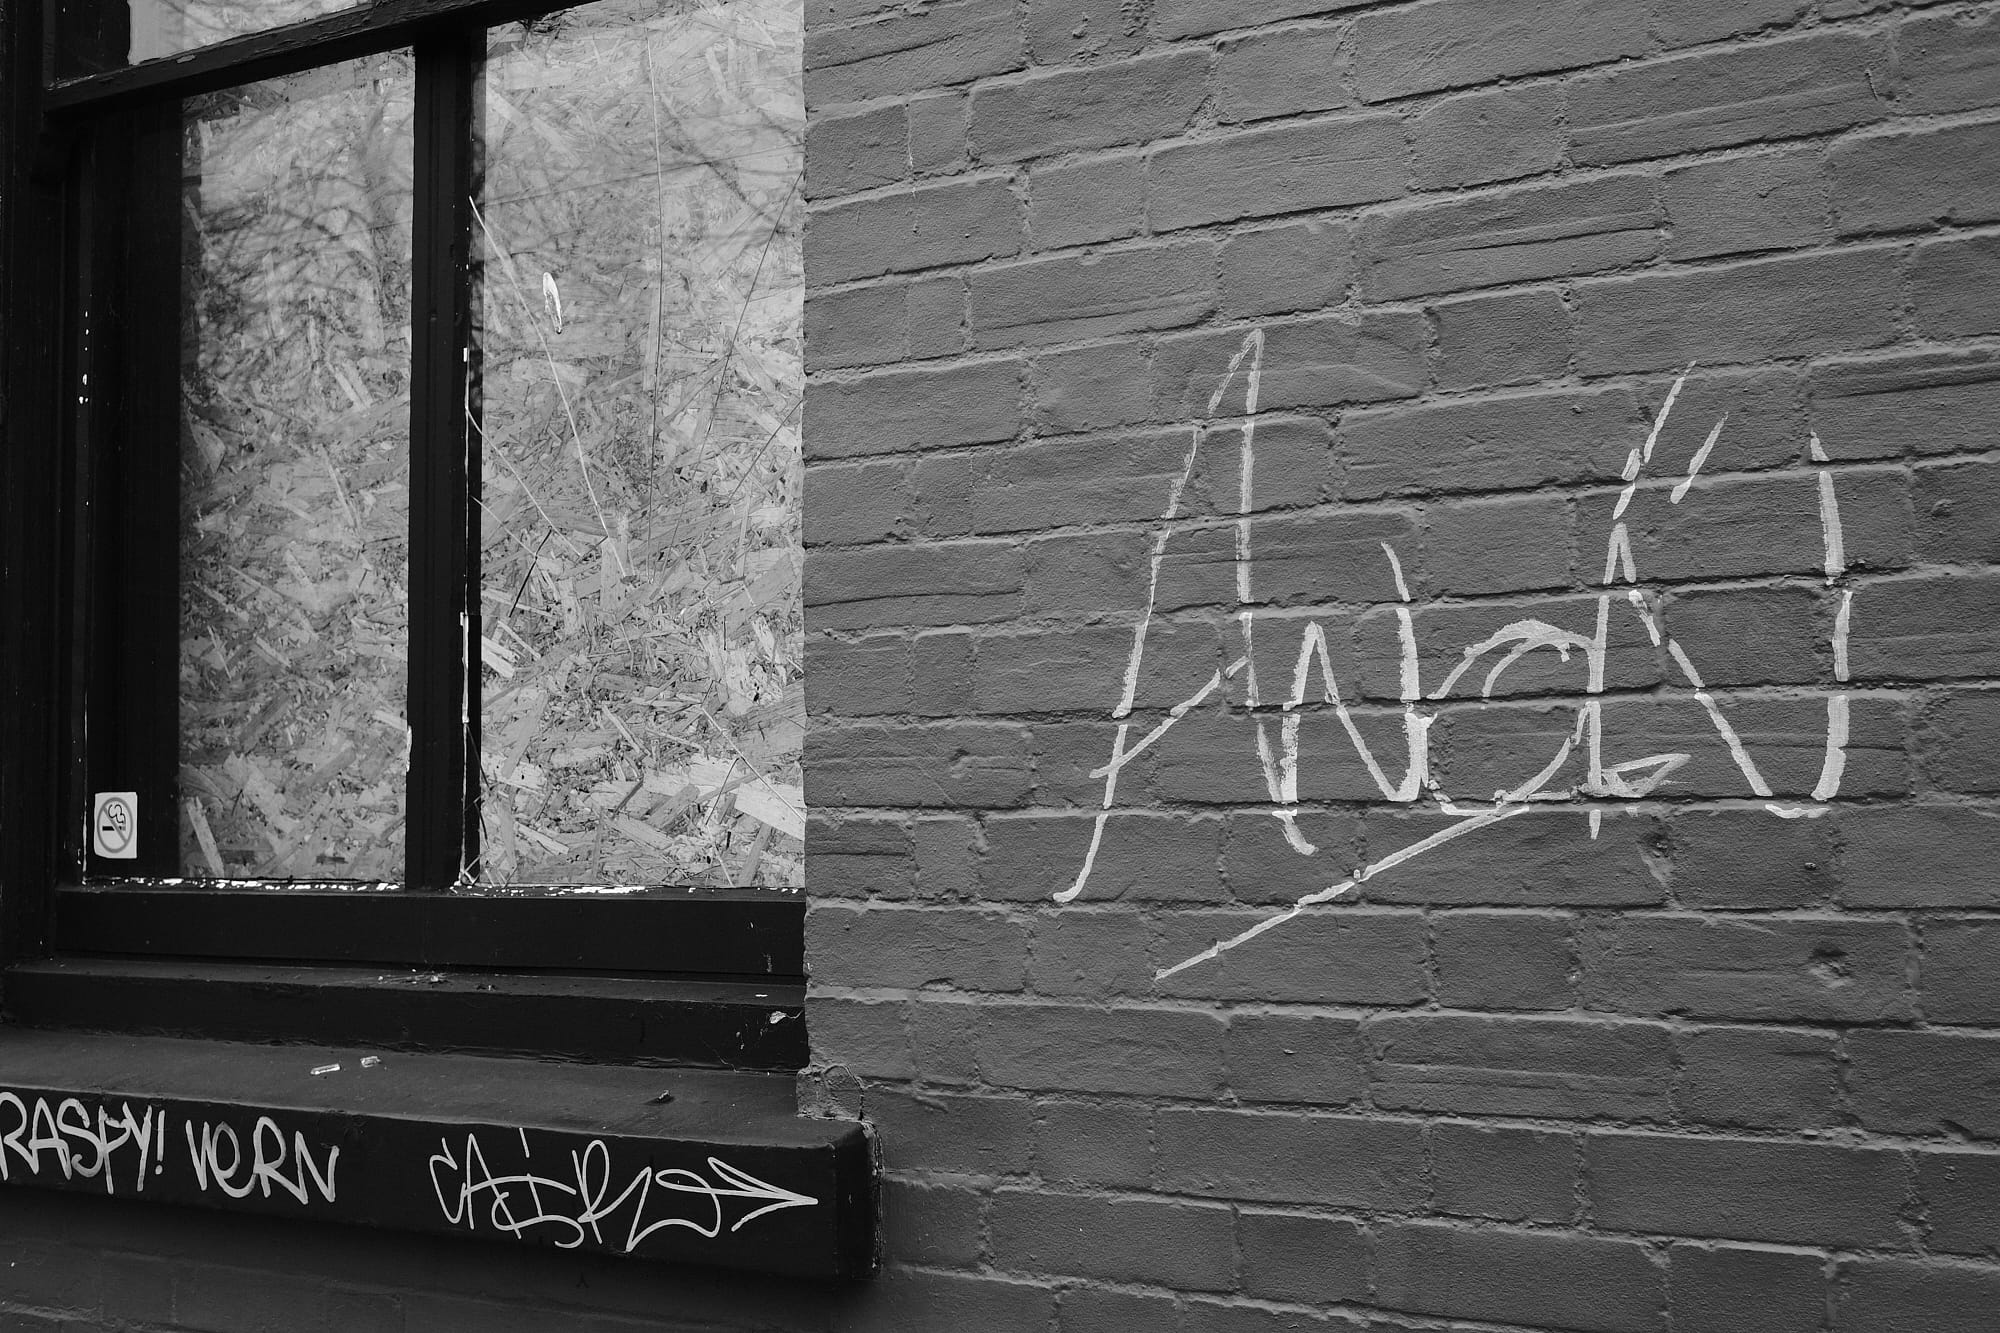 boarded-up broken window and ‘Anon’ graffiti